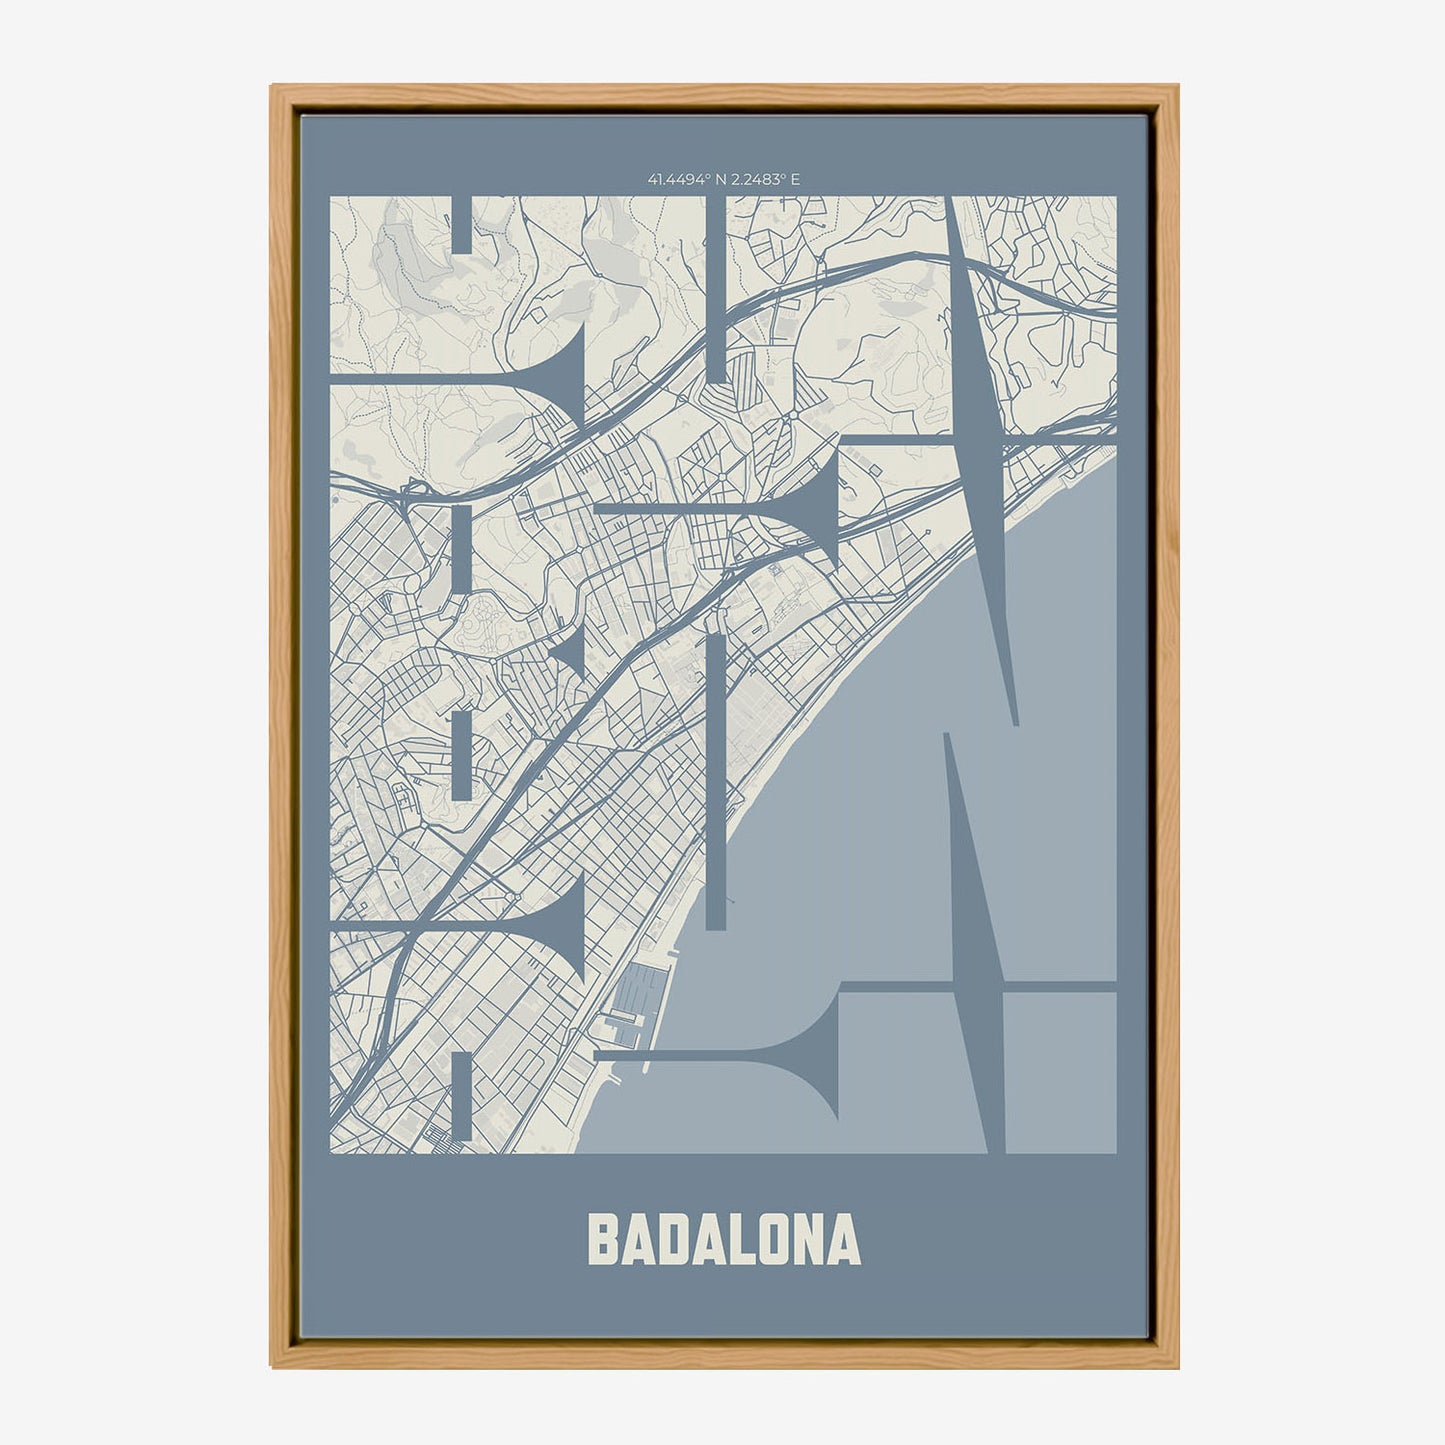 BDN Badalona Poster